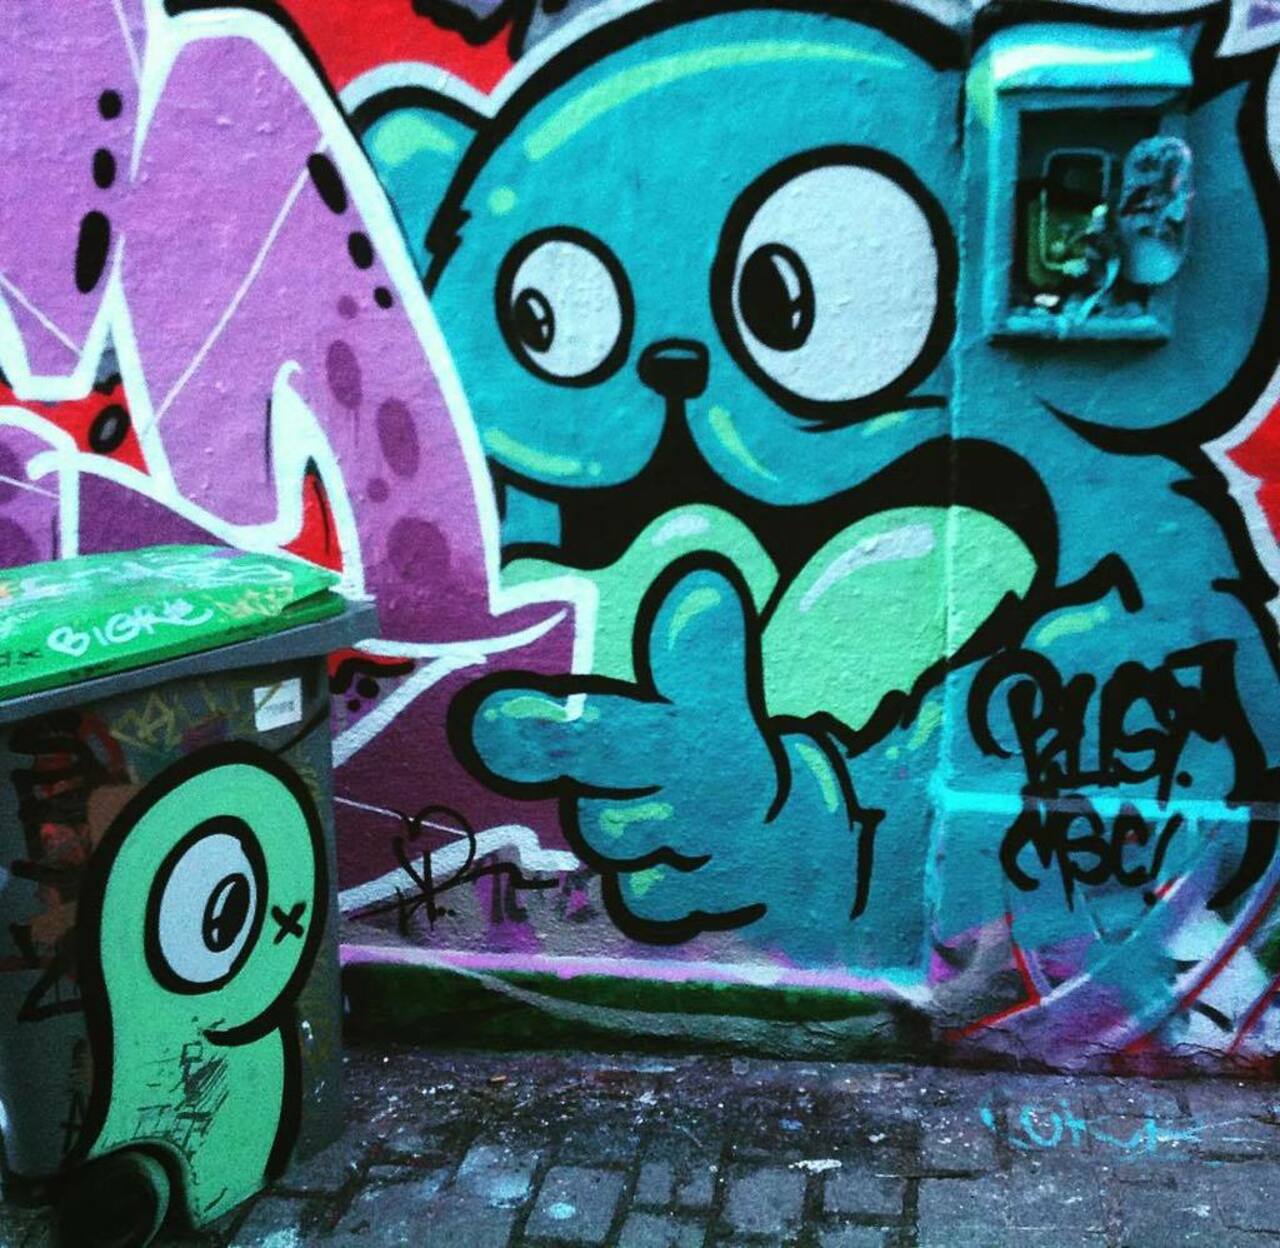 Baby poubelle #street #streetart #streetartparis #graff #graffiti #wallart #sprayart #urban #urbain #urbanart #urba… https://t.co/EFzuDZoawL